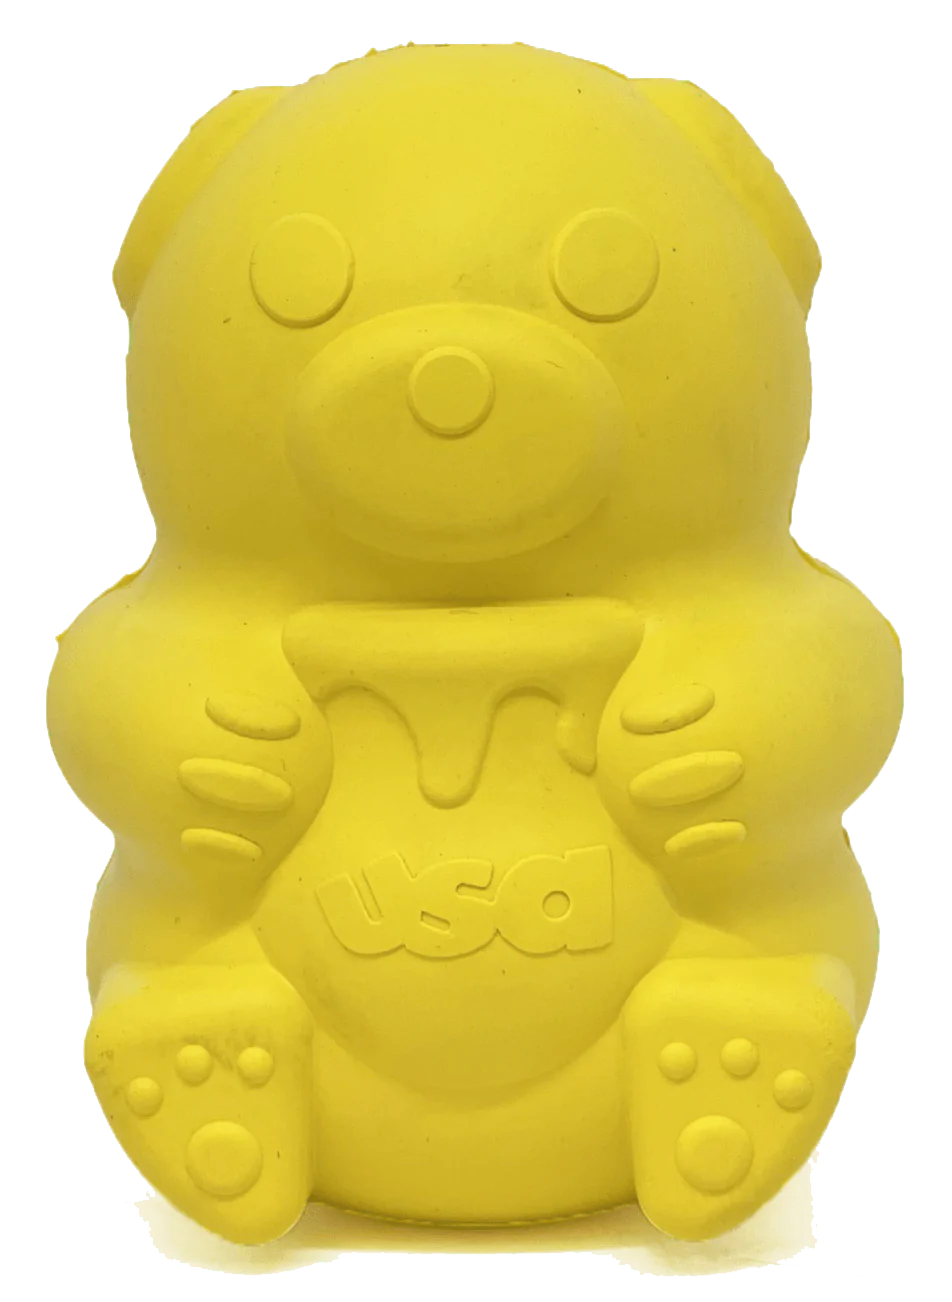 SP Honey Bear Treat Dispenser Toy